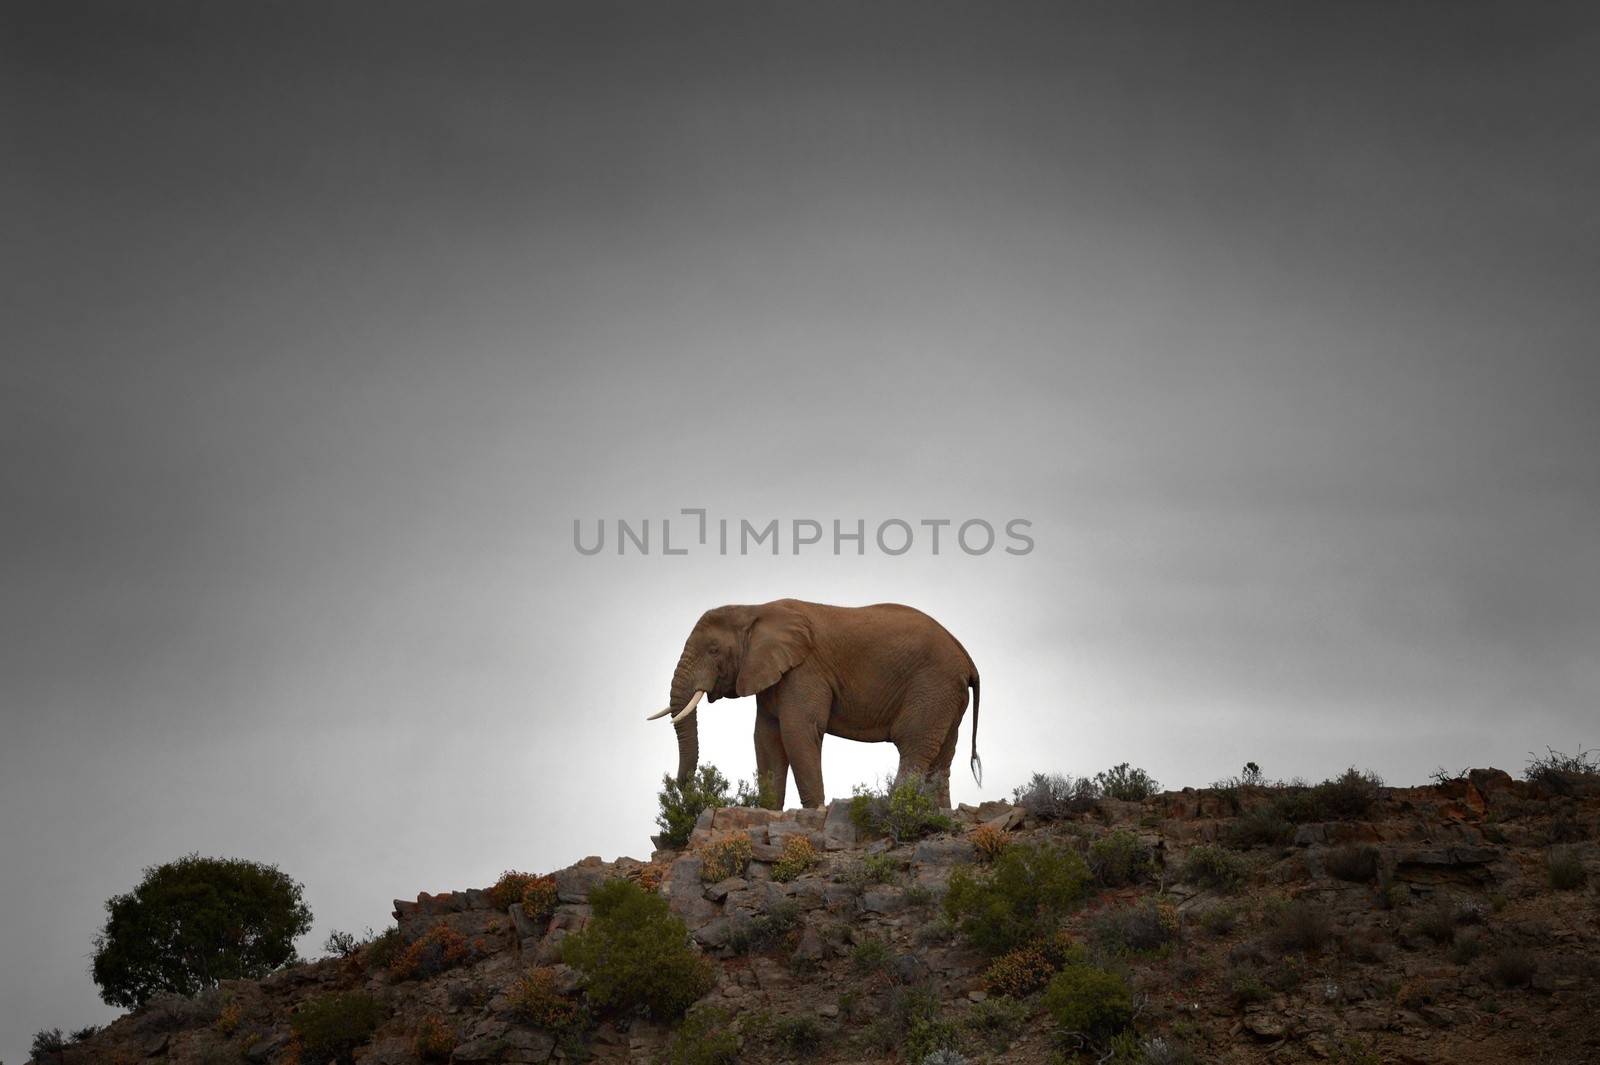 A shot of an Elephant while on safari